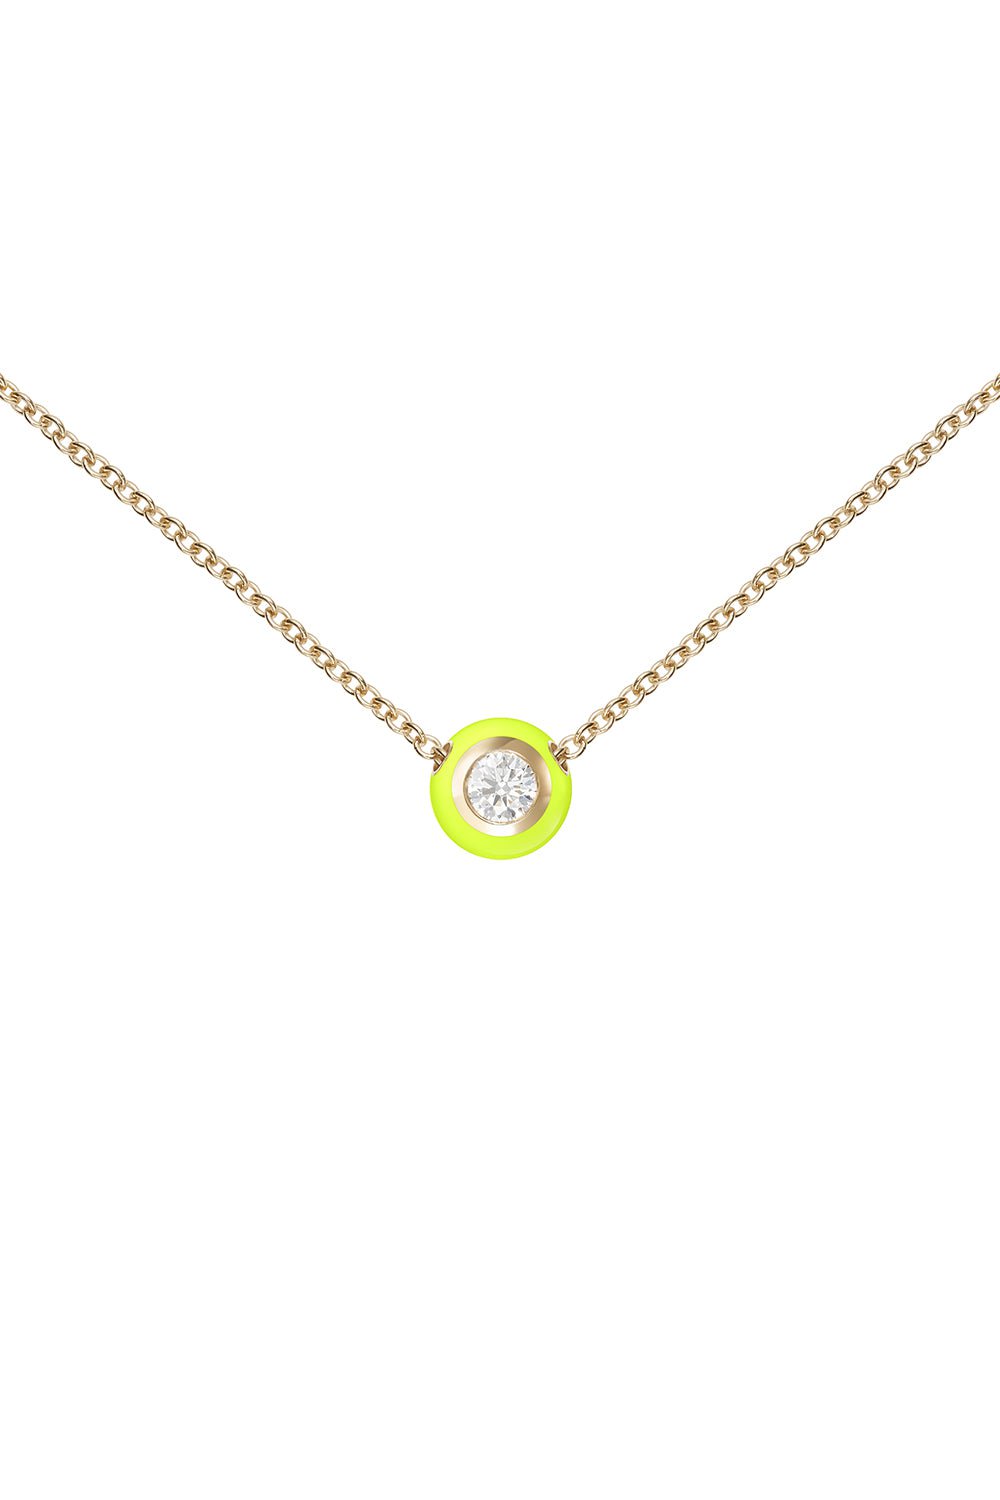 MELISSA KAYE-Small Neon Yellow Audrey Pendant Necklace-YELLOW GOLD